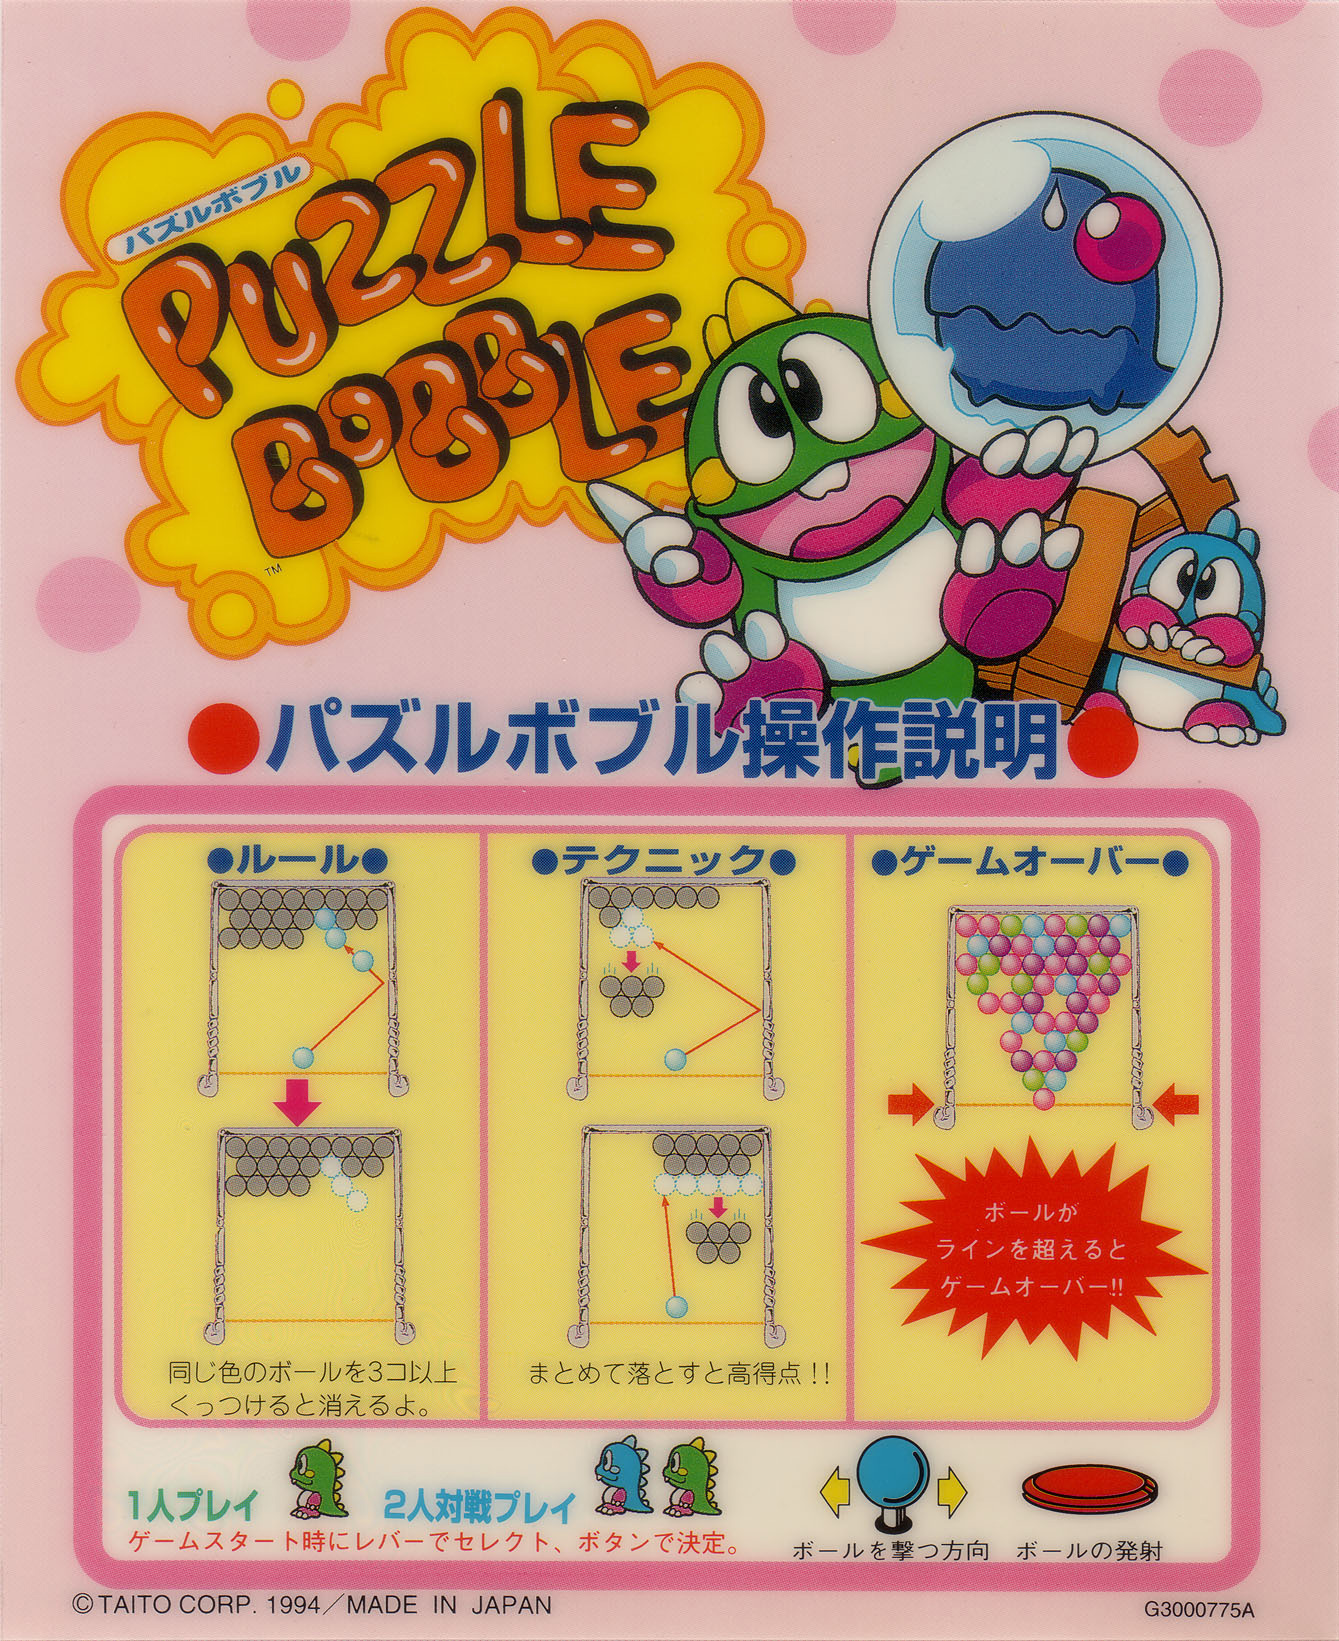 puzzle bobble arcade